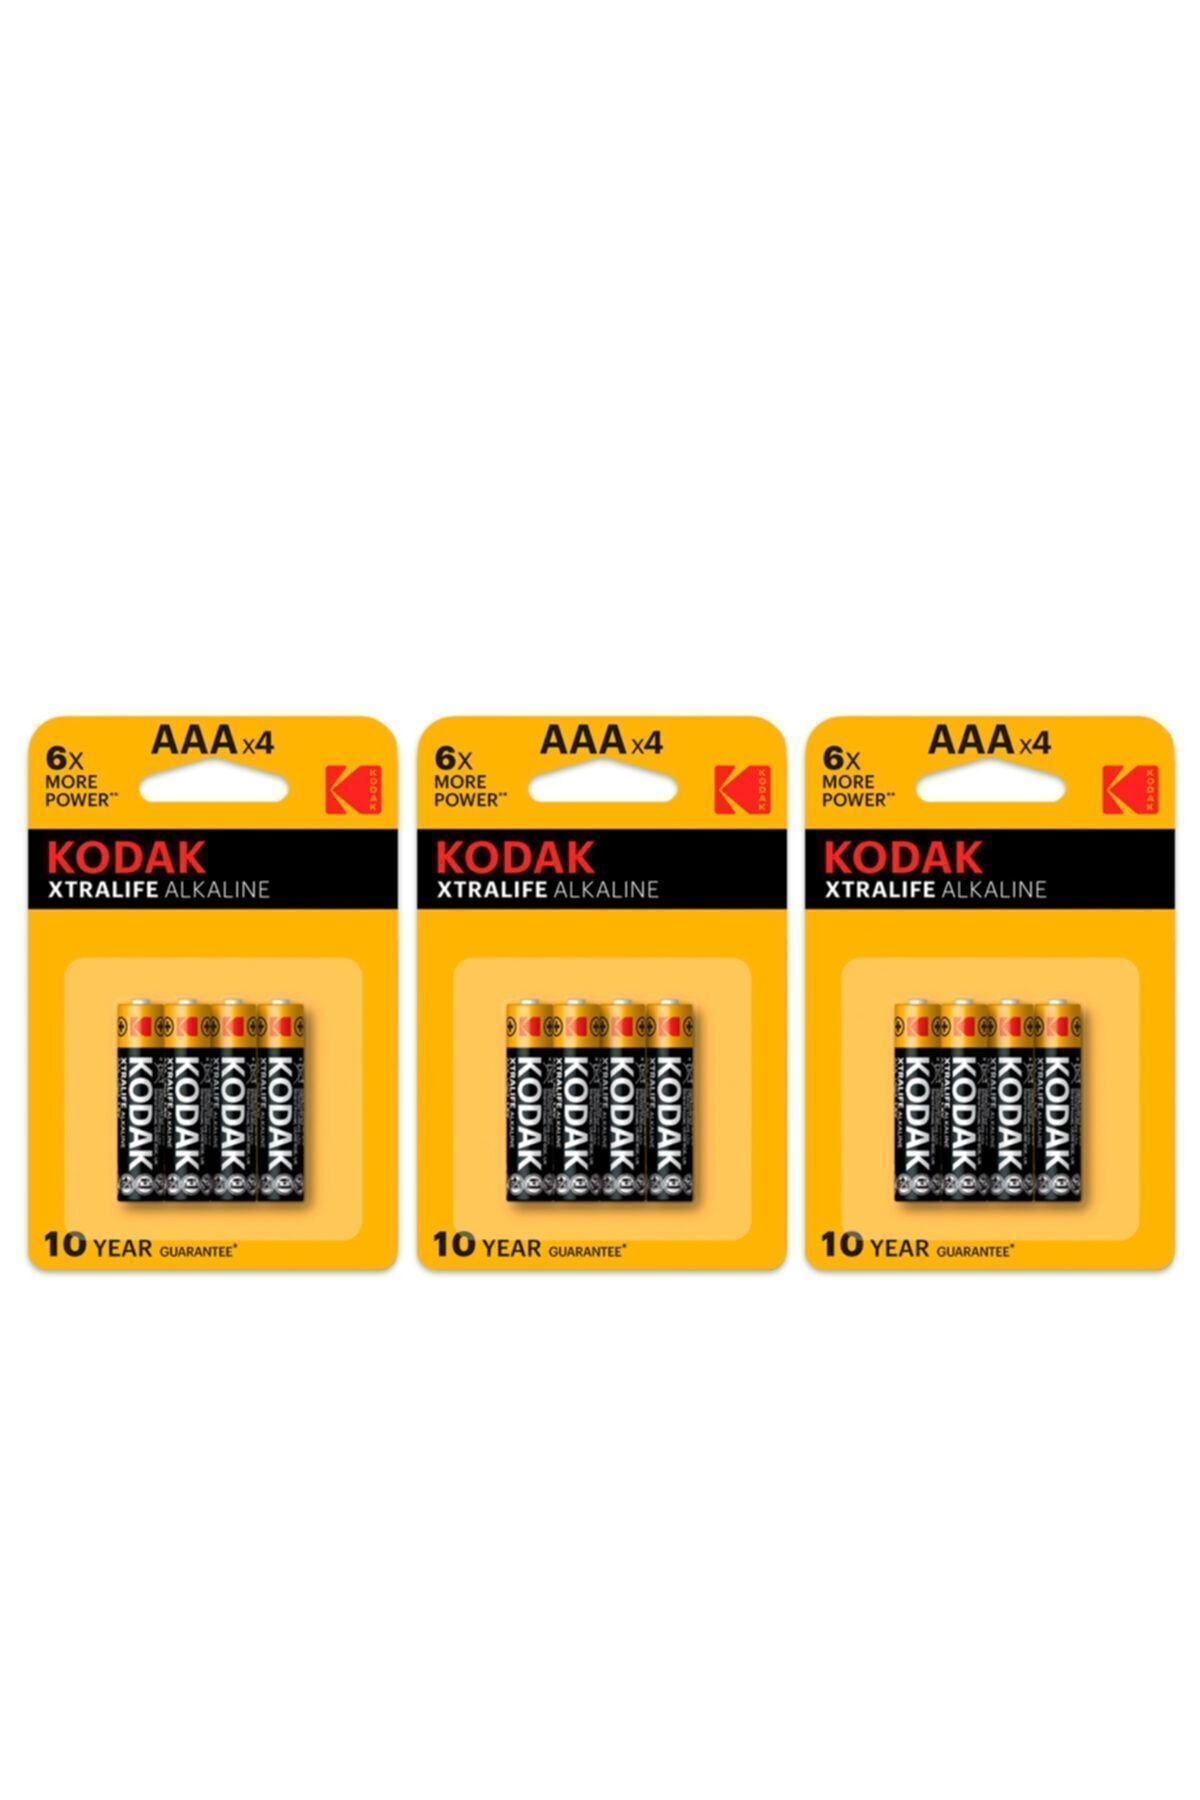 Kodak Xtralife Alkalin (3x4) 12 Adet - Alkalin ince Pil - Ekonomik Paket